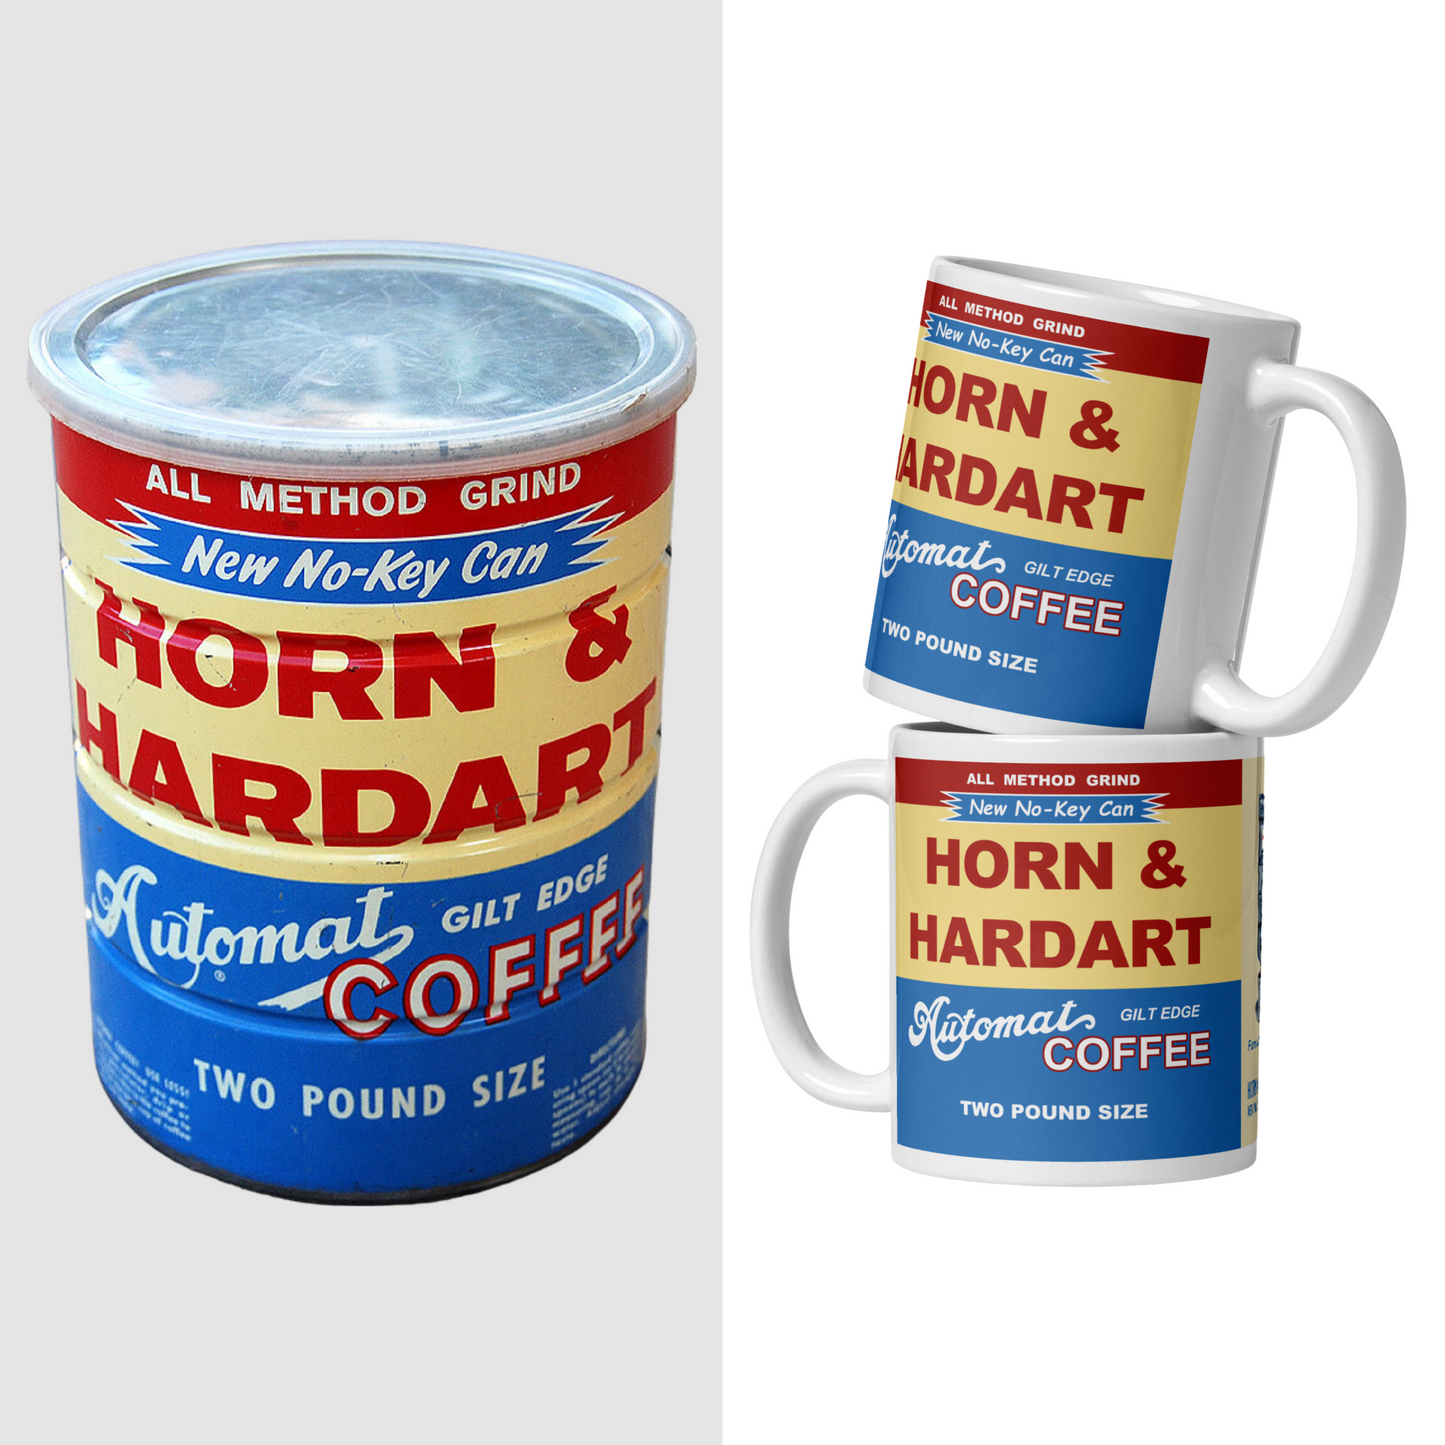 Horn & Hardart All Method Grind Coffee Tin next to mug